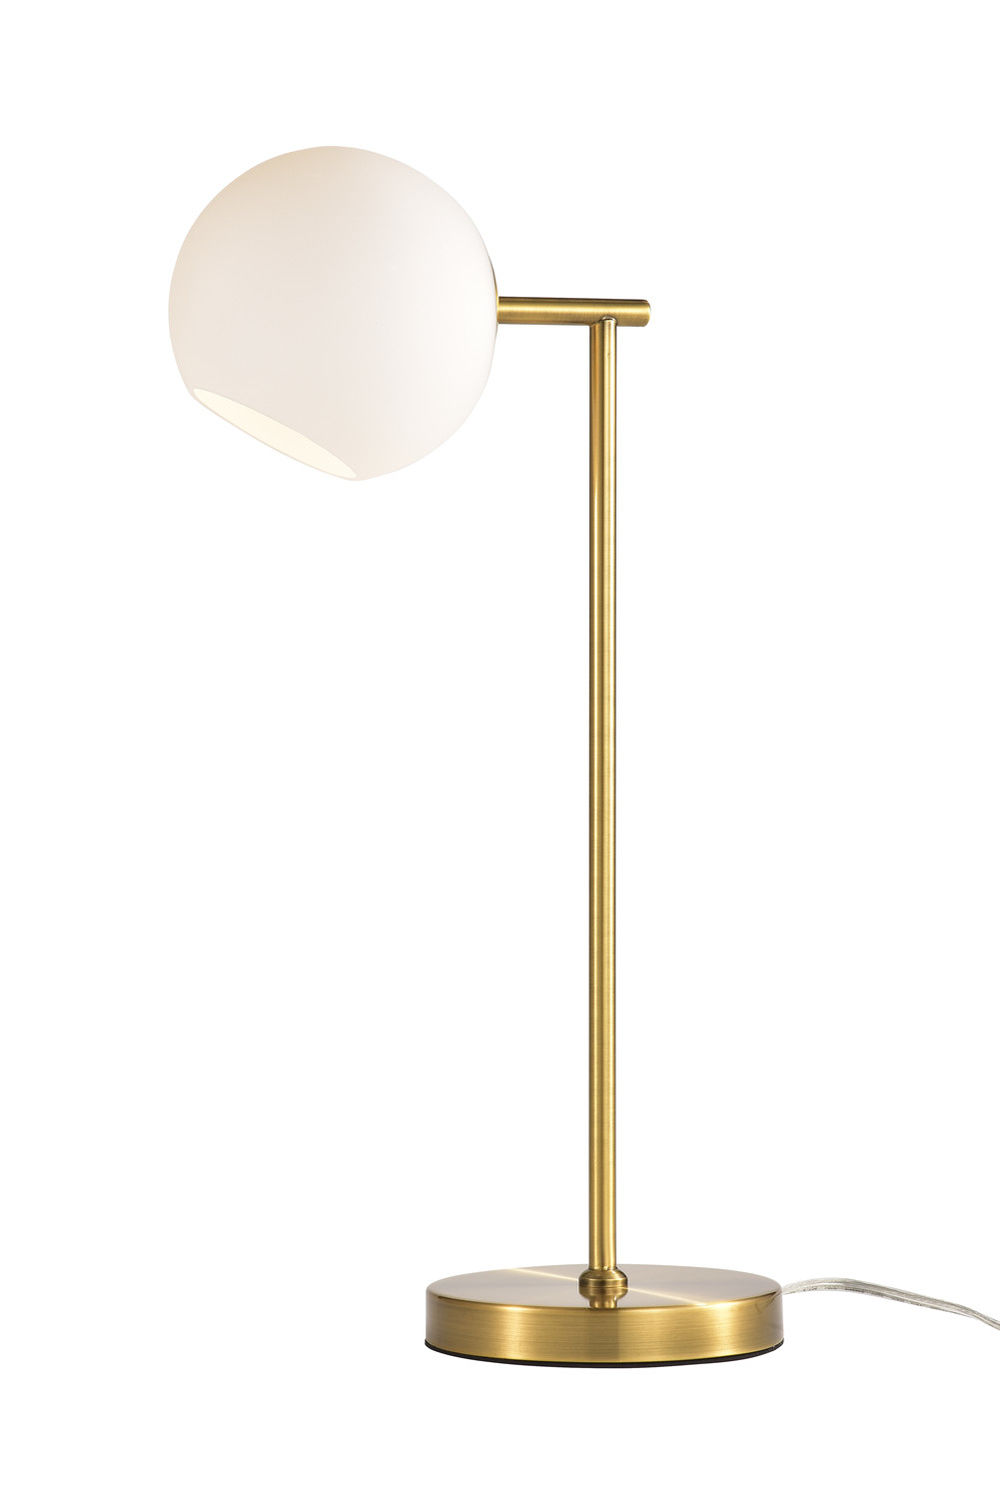 IM Lighting 1-light Modern Nordic bronze indoor metal style glass table lamp lighting